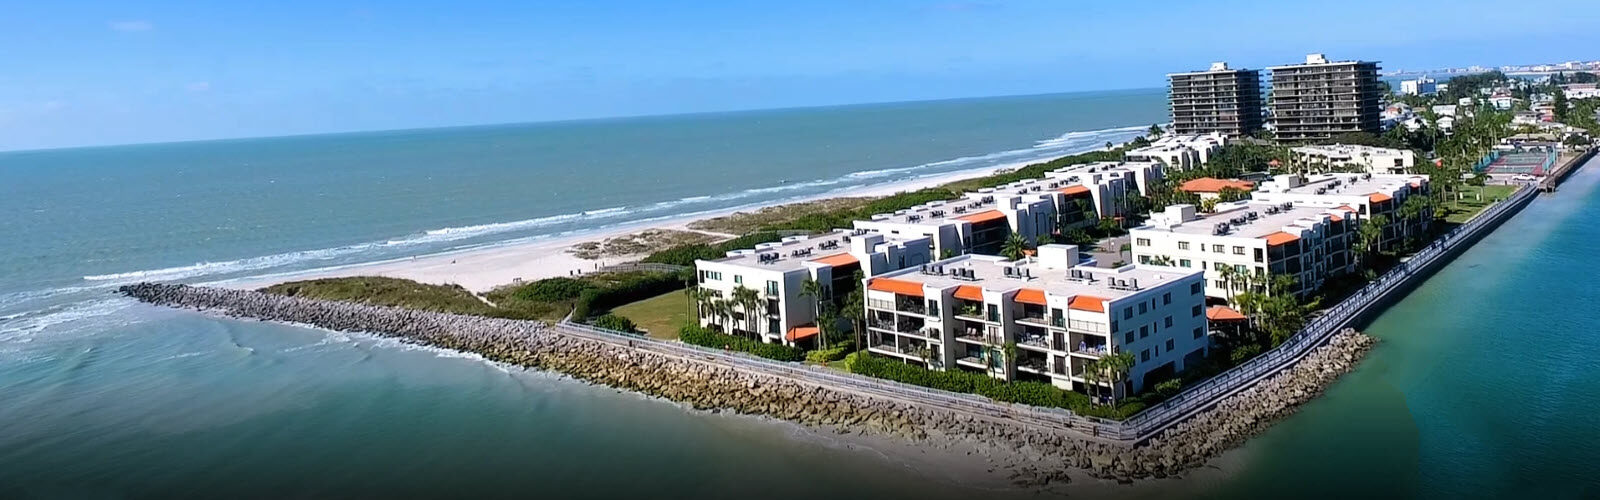 Resort Rentals Vacation Condos on St Pete Beach, Florida